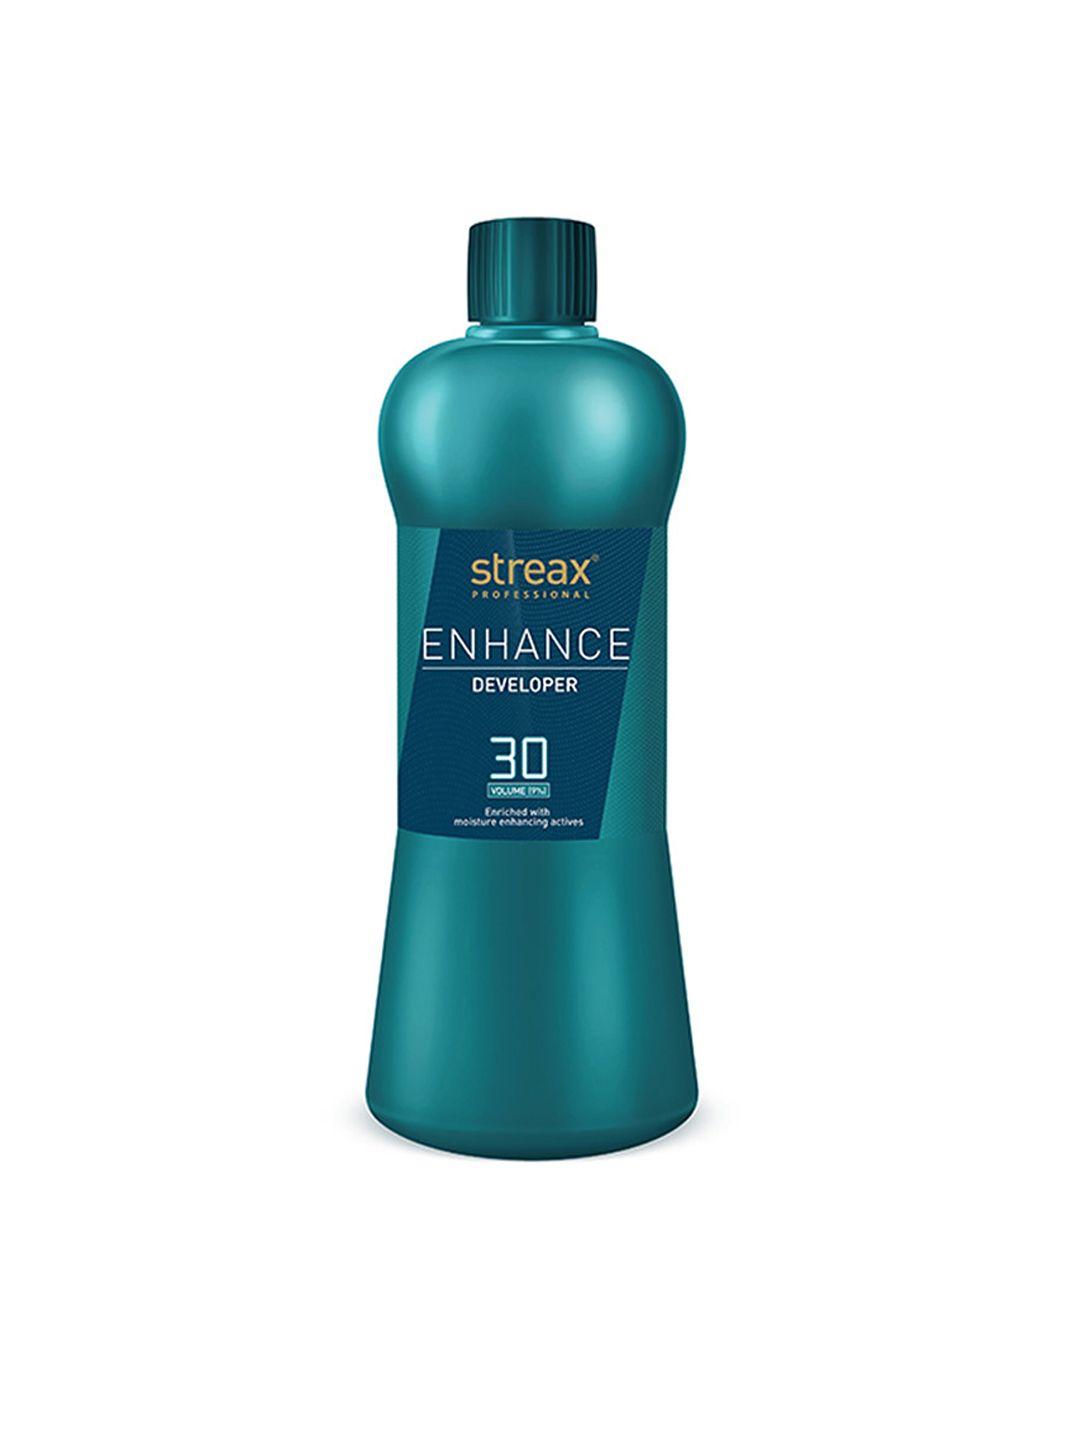 streax professional enhance 30 volume hair colour developer with lanolin - 1 l